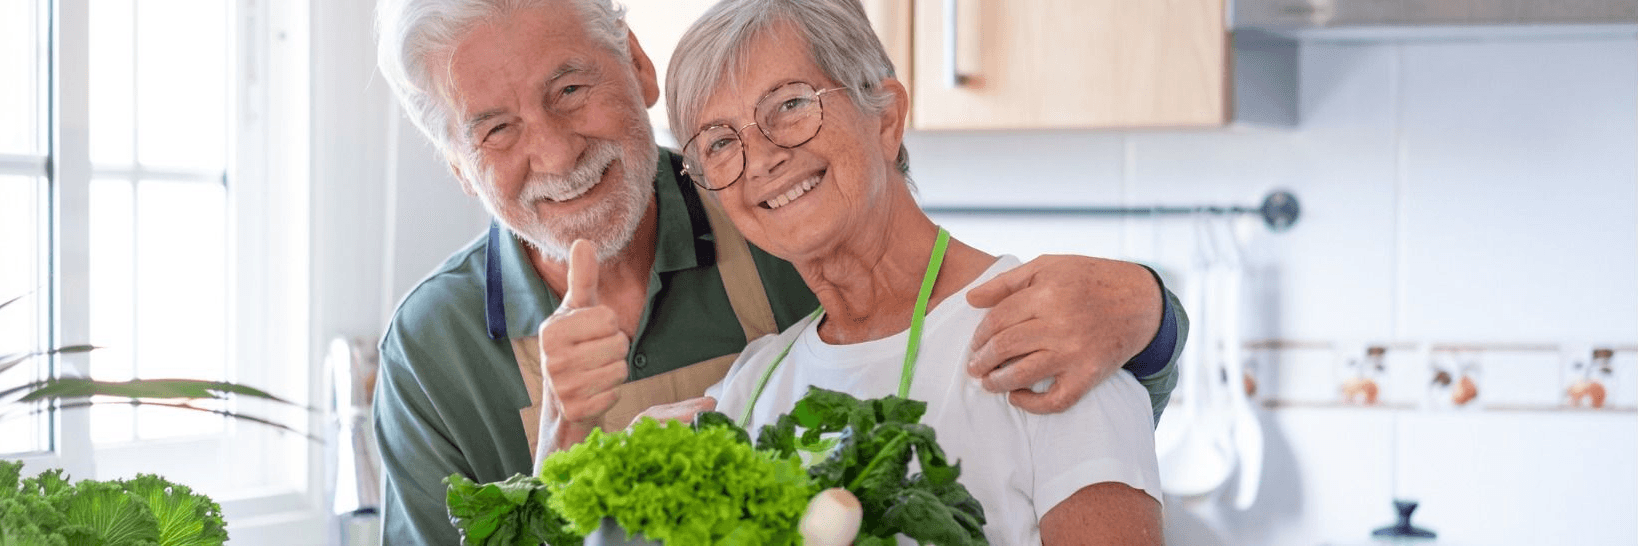 Gesunde Ernährung im Alter: Tipps